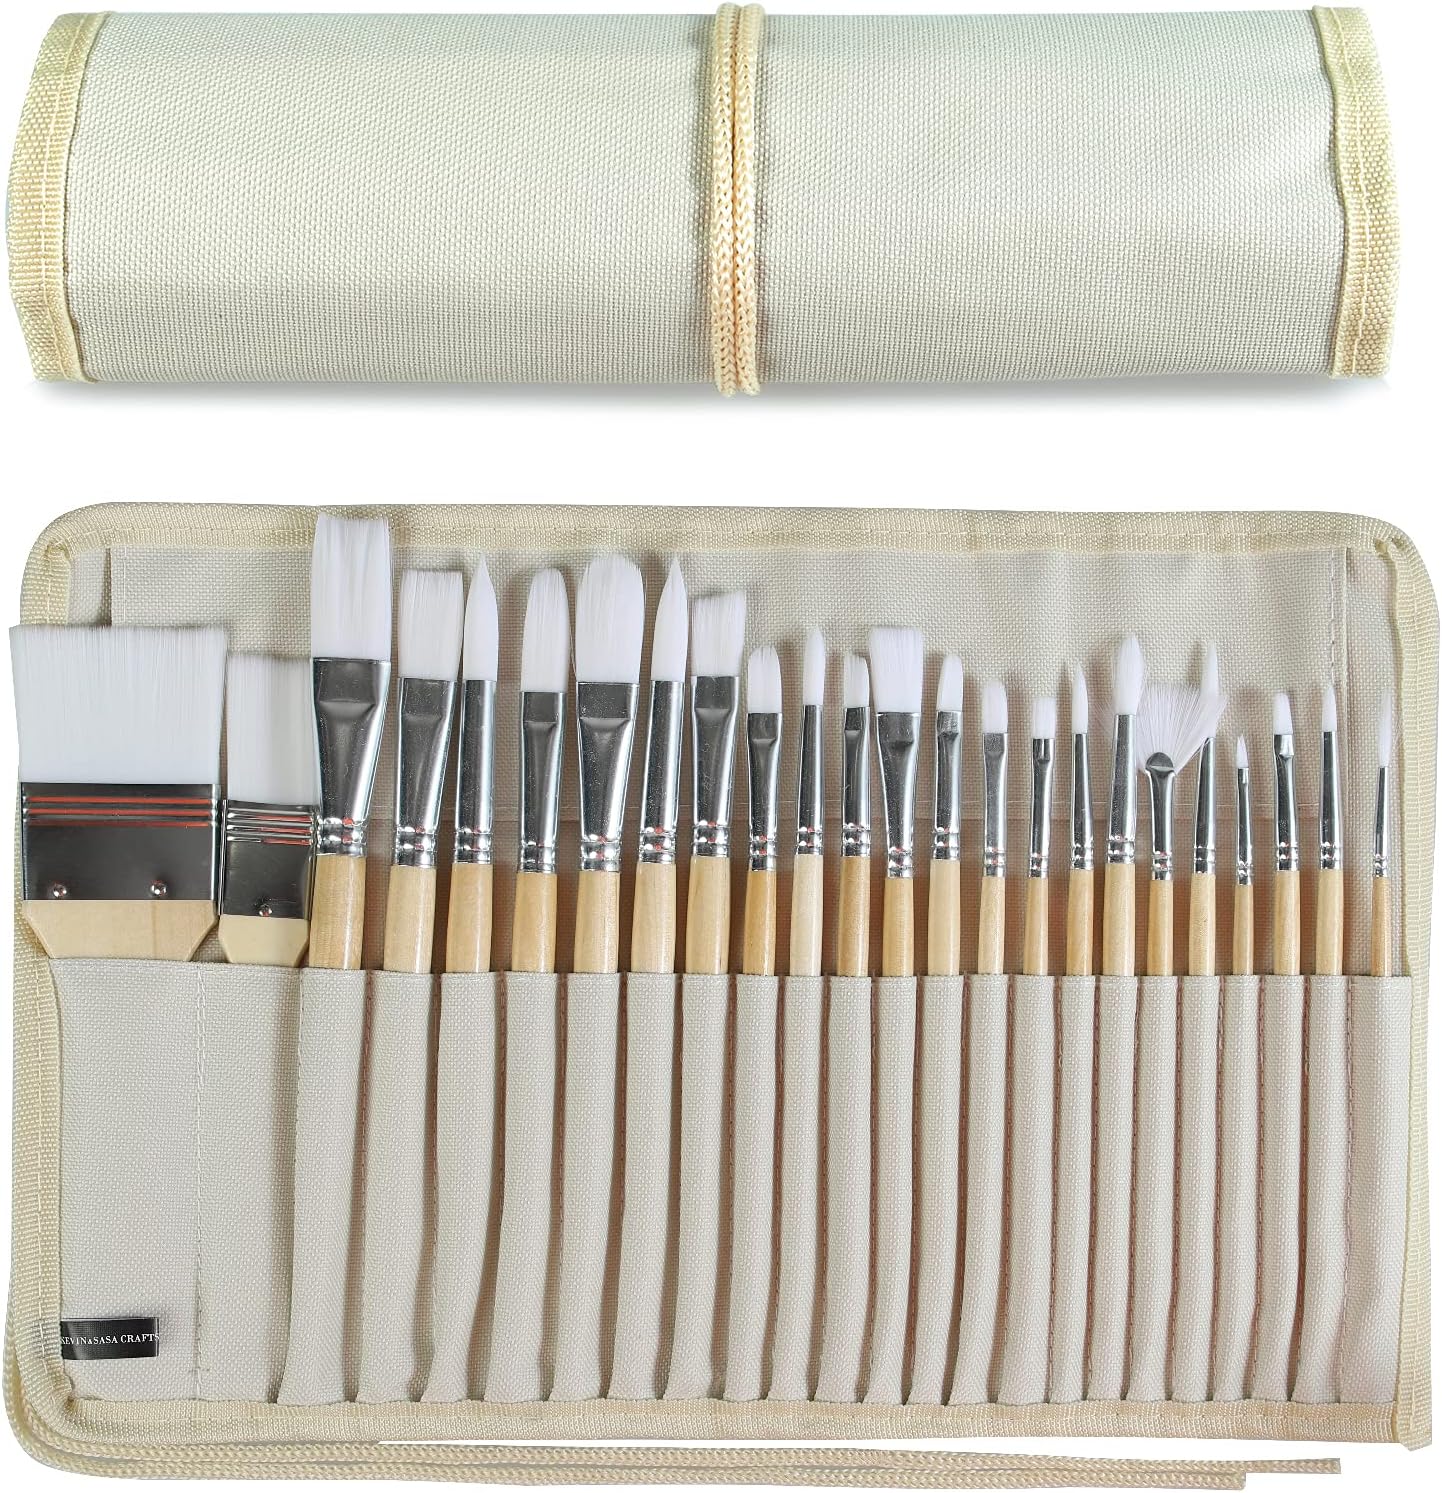 AROIC Acrylic Paint Brush Set, 15 pcs Nylon Hair Paint Brushes for